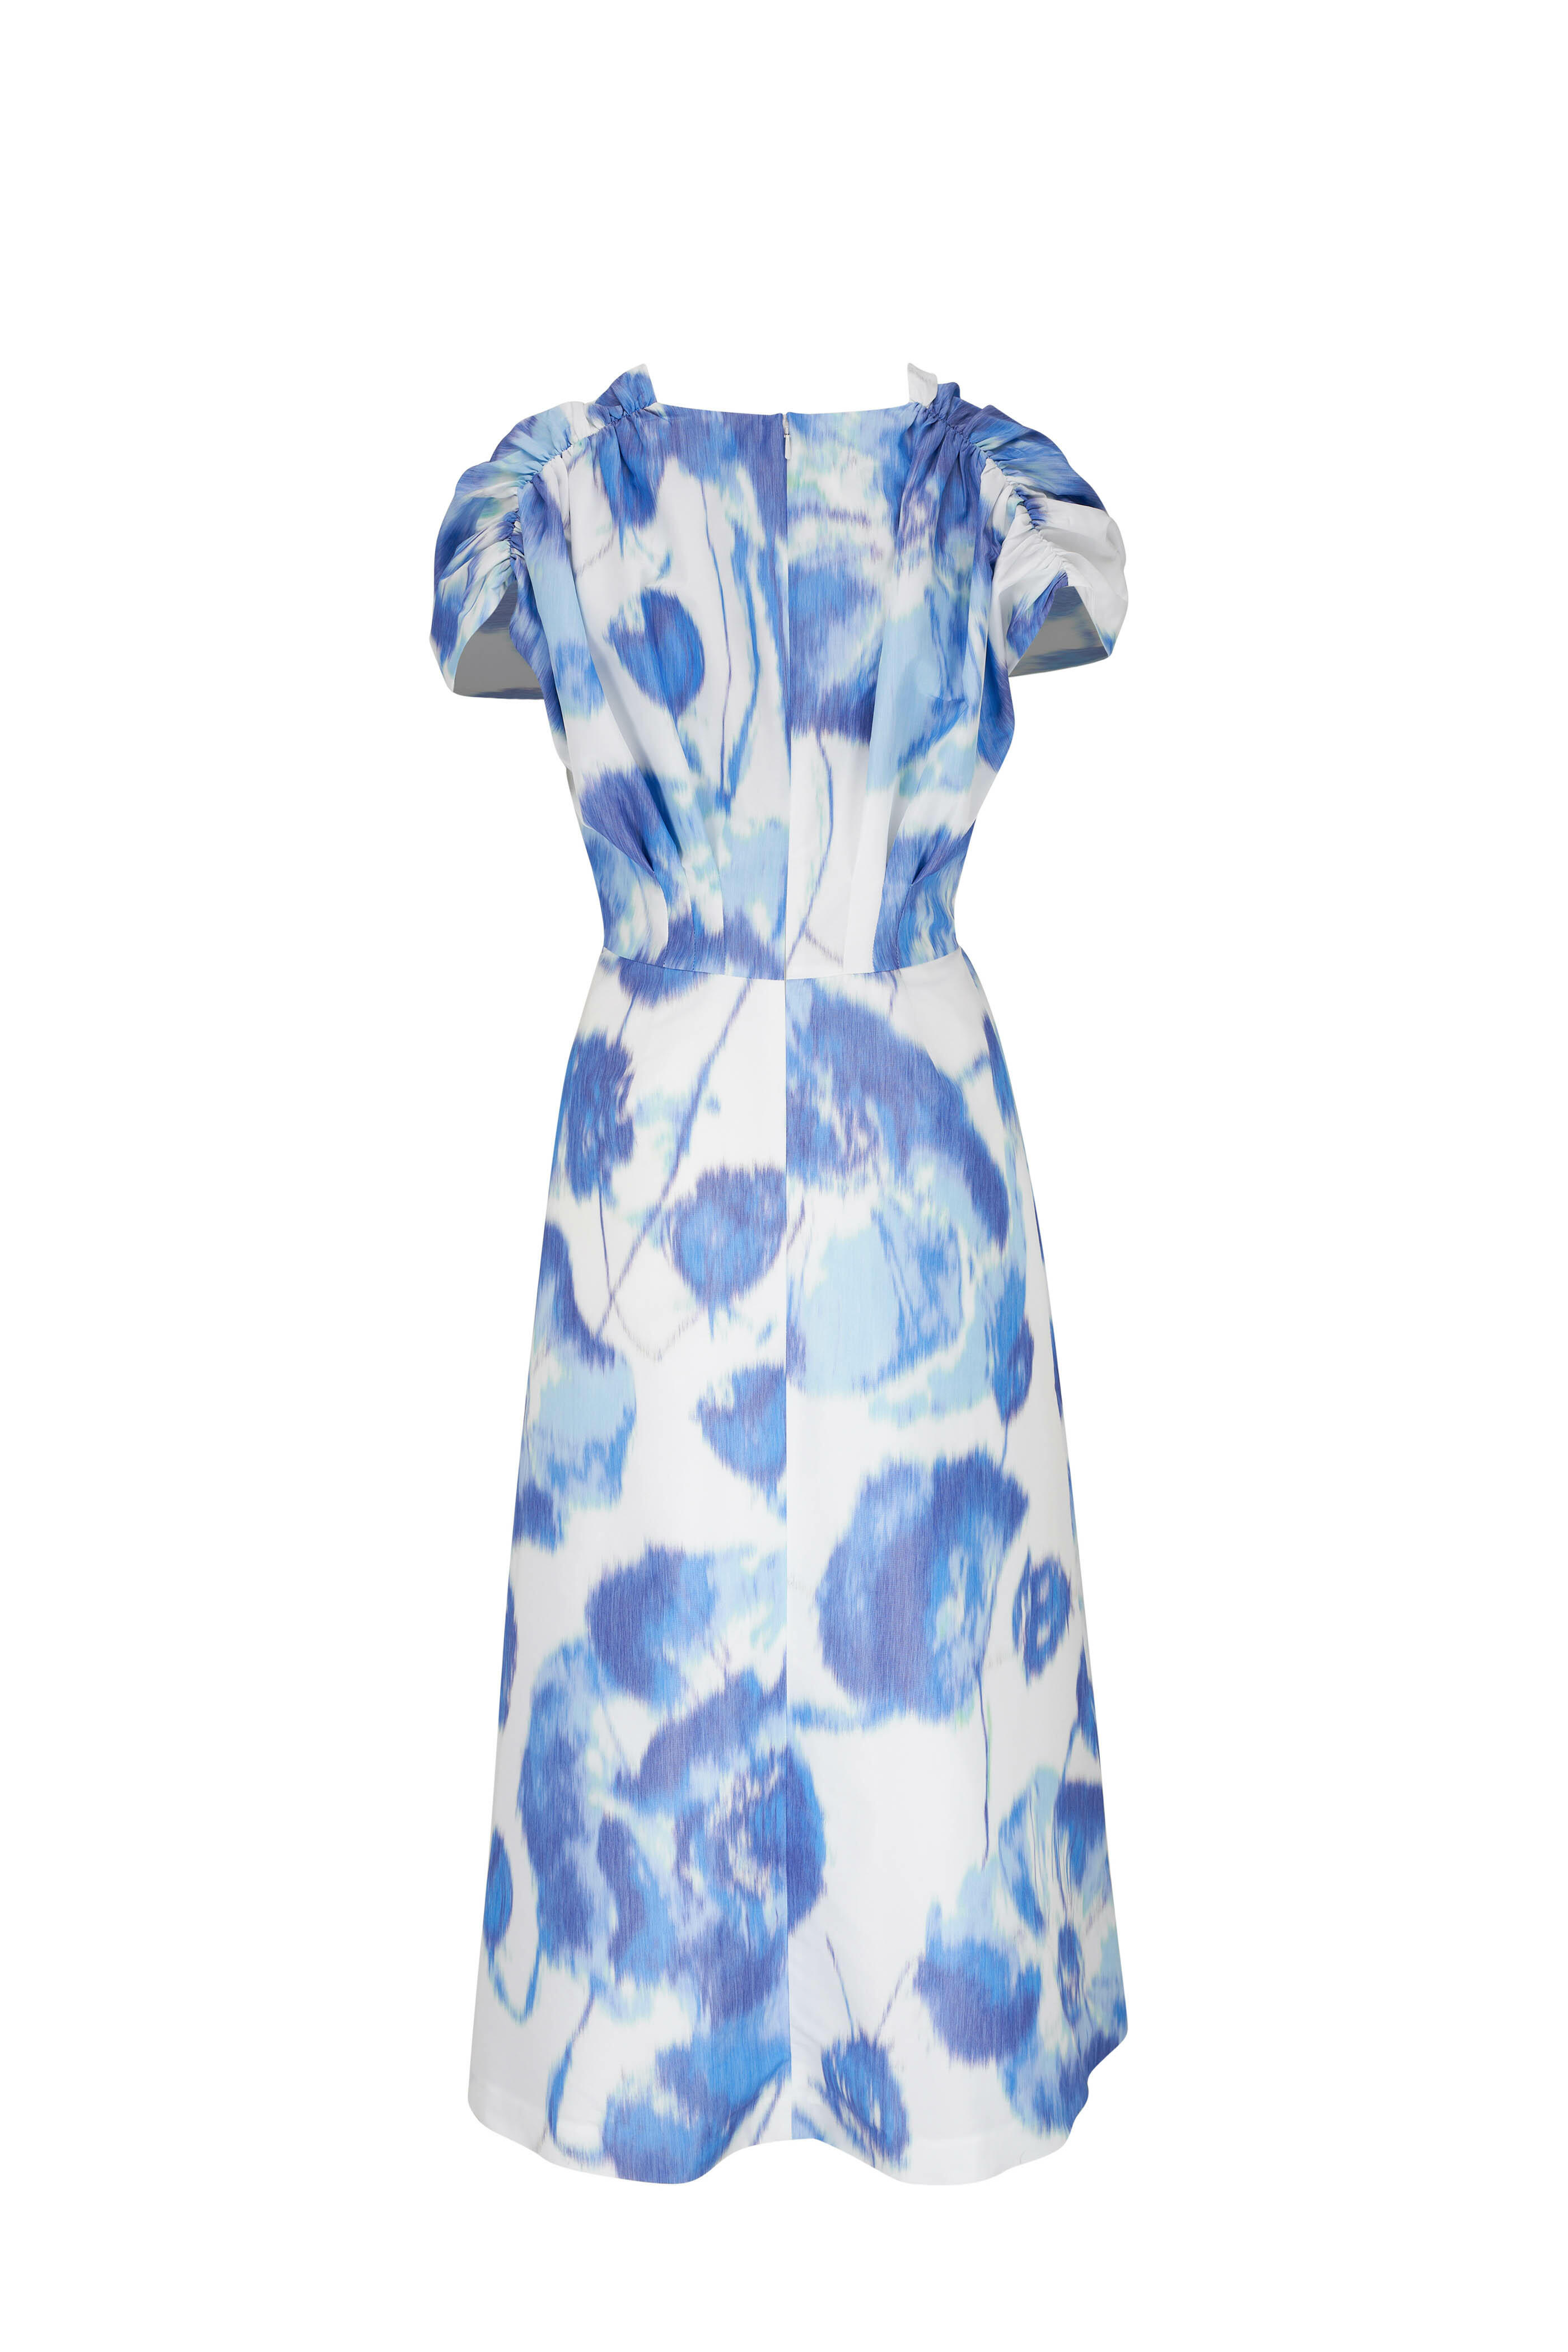 Lela Rose - Isabel Ivory Multi Printed Midi Dress